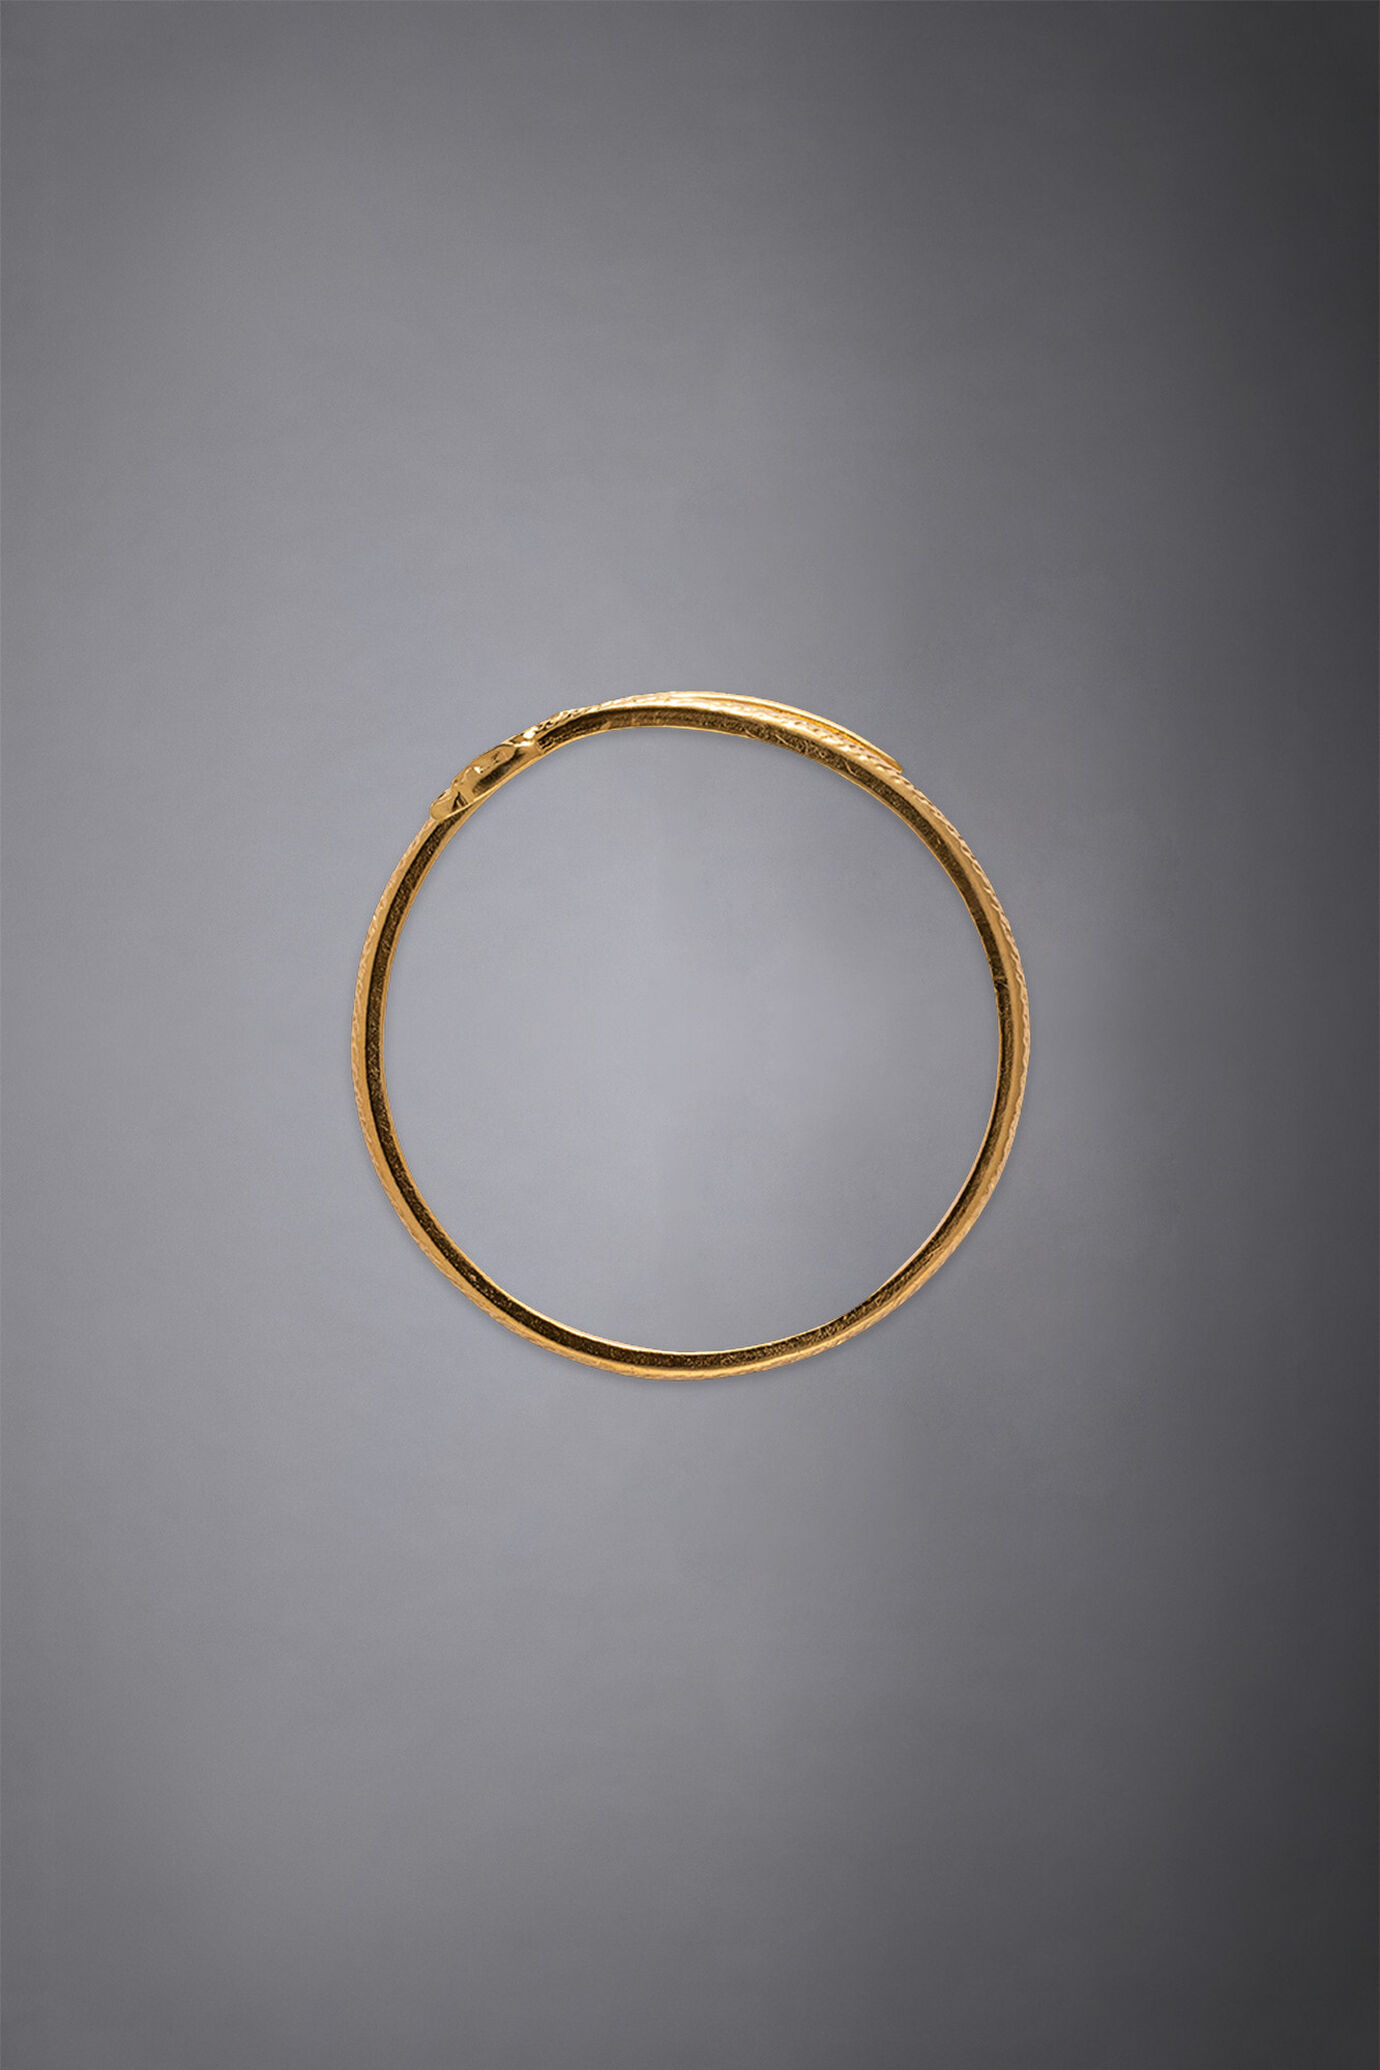 Women's bracelet made of brass